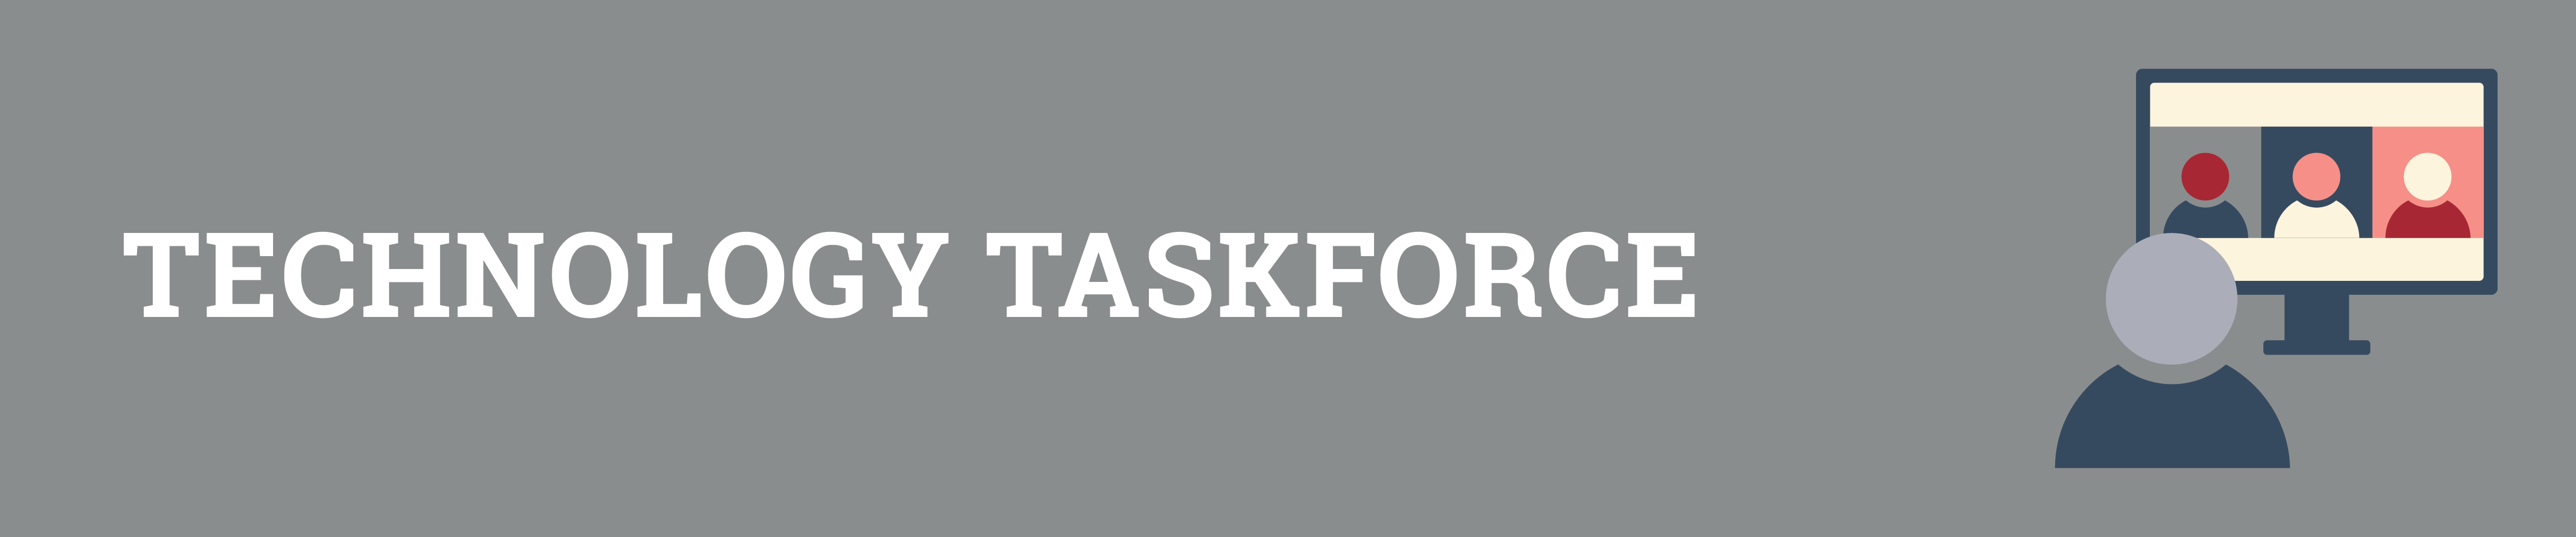 Technology Taskforce Header Image